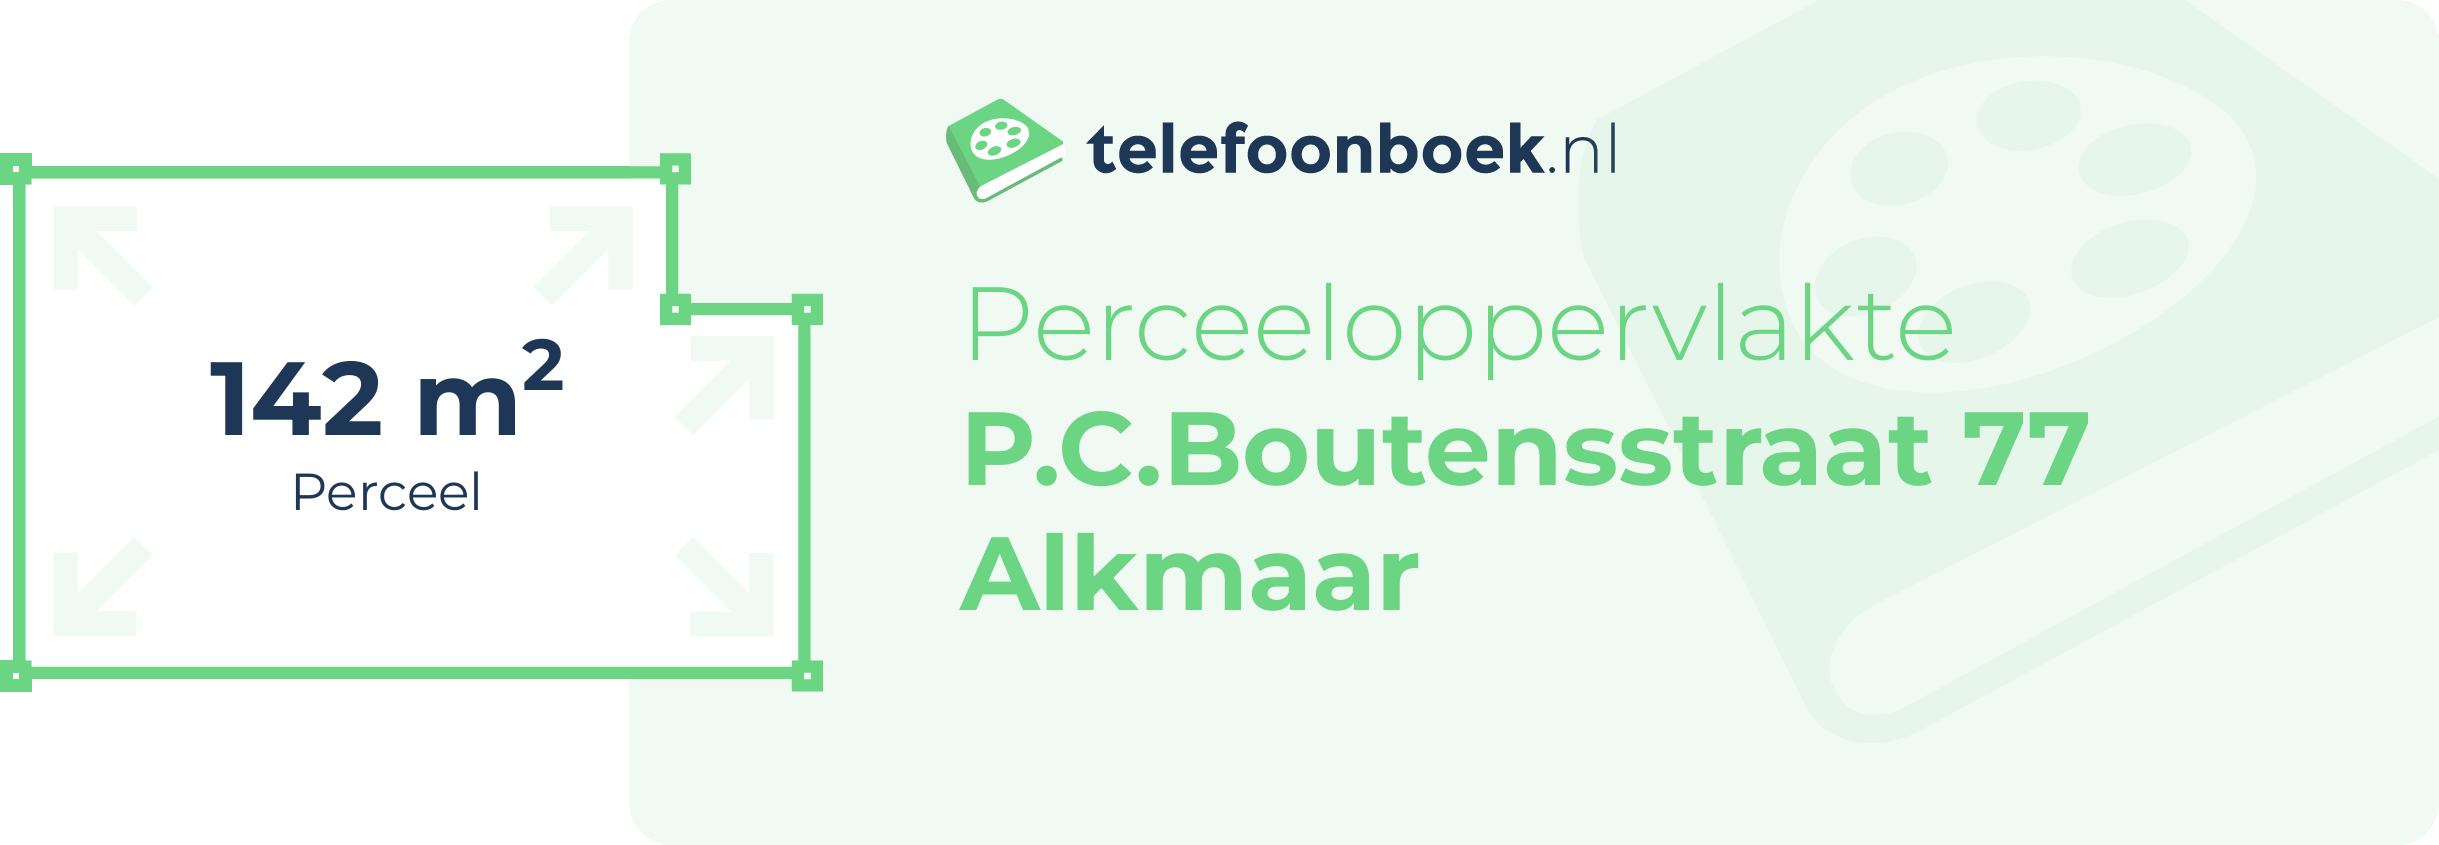 Perceeloppervlakte P.C.Boutensstraat 77 Alkmaar